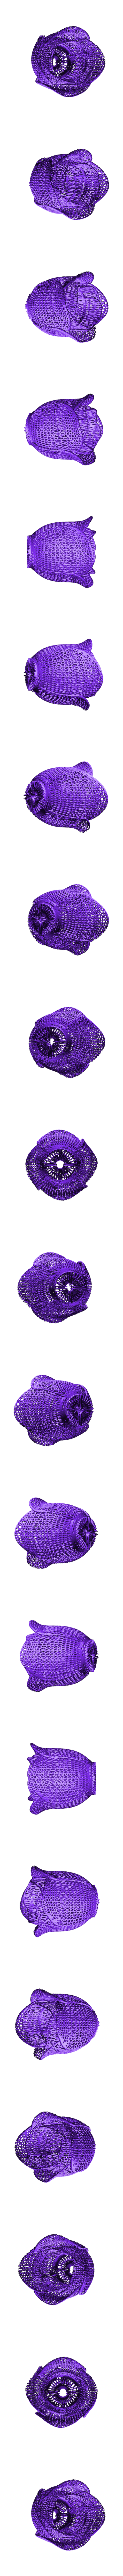 tulipe.stl Download STL file Voronoi tulip • 3D printing design, juanpix